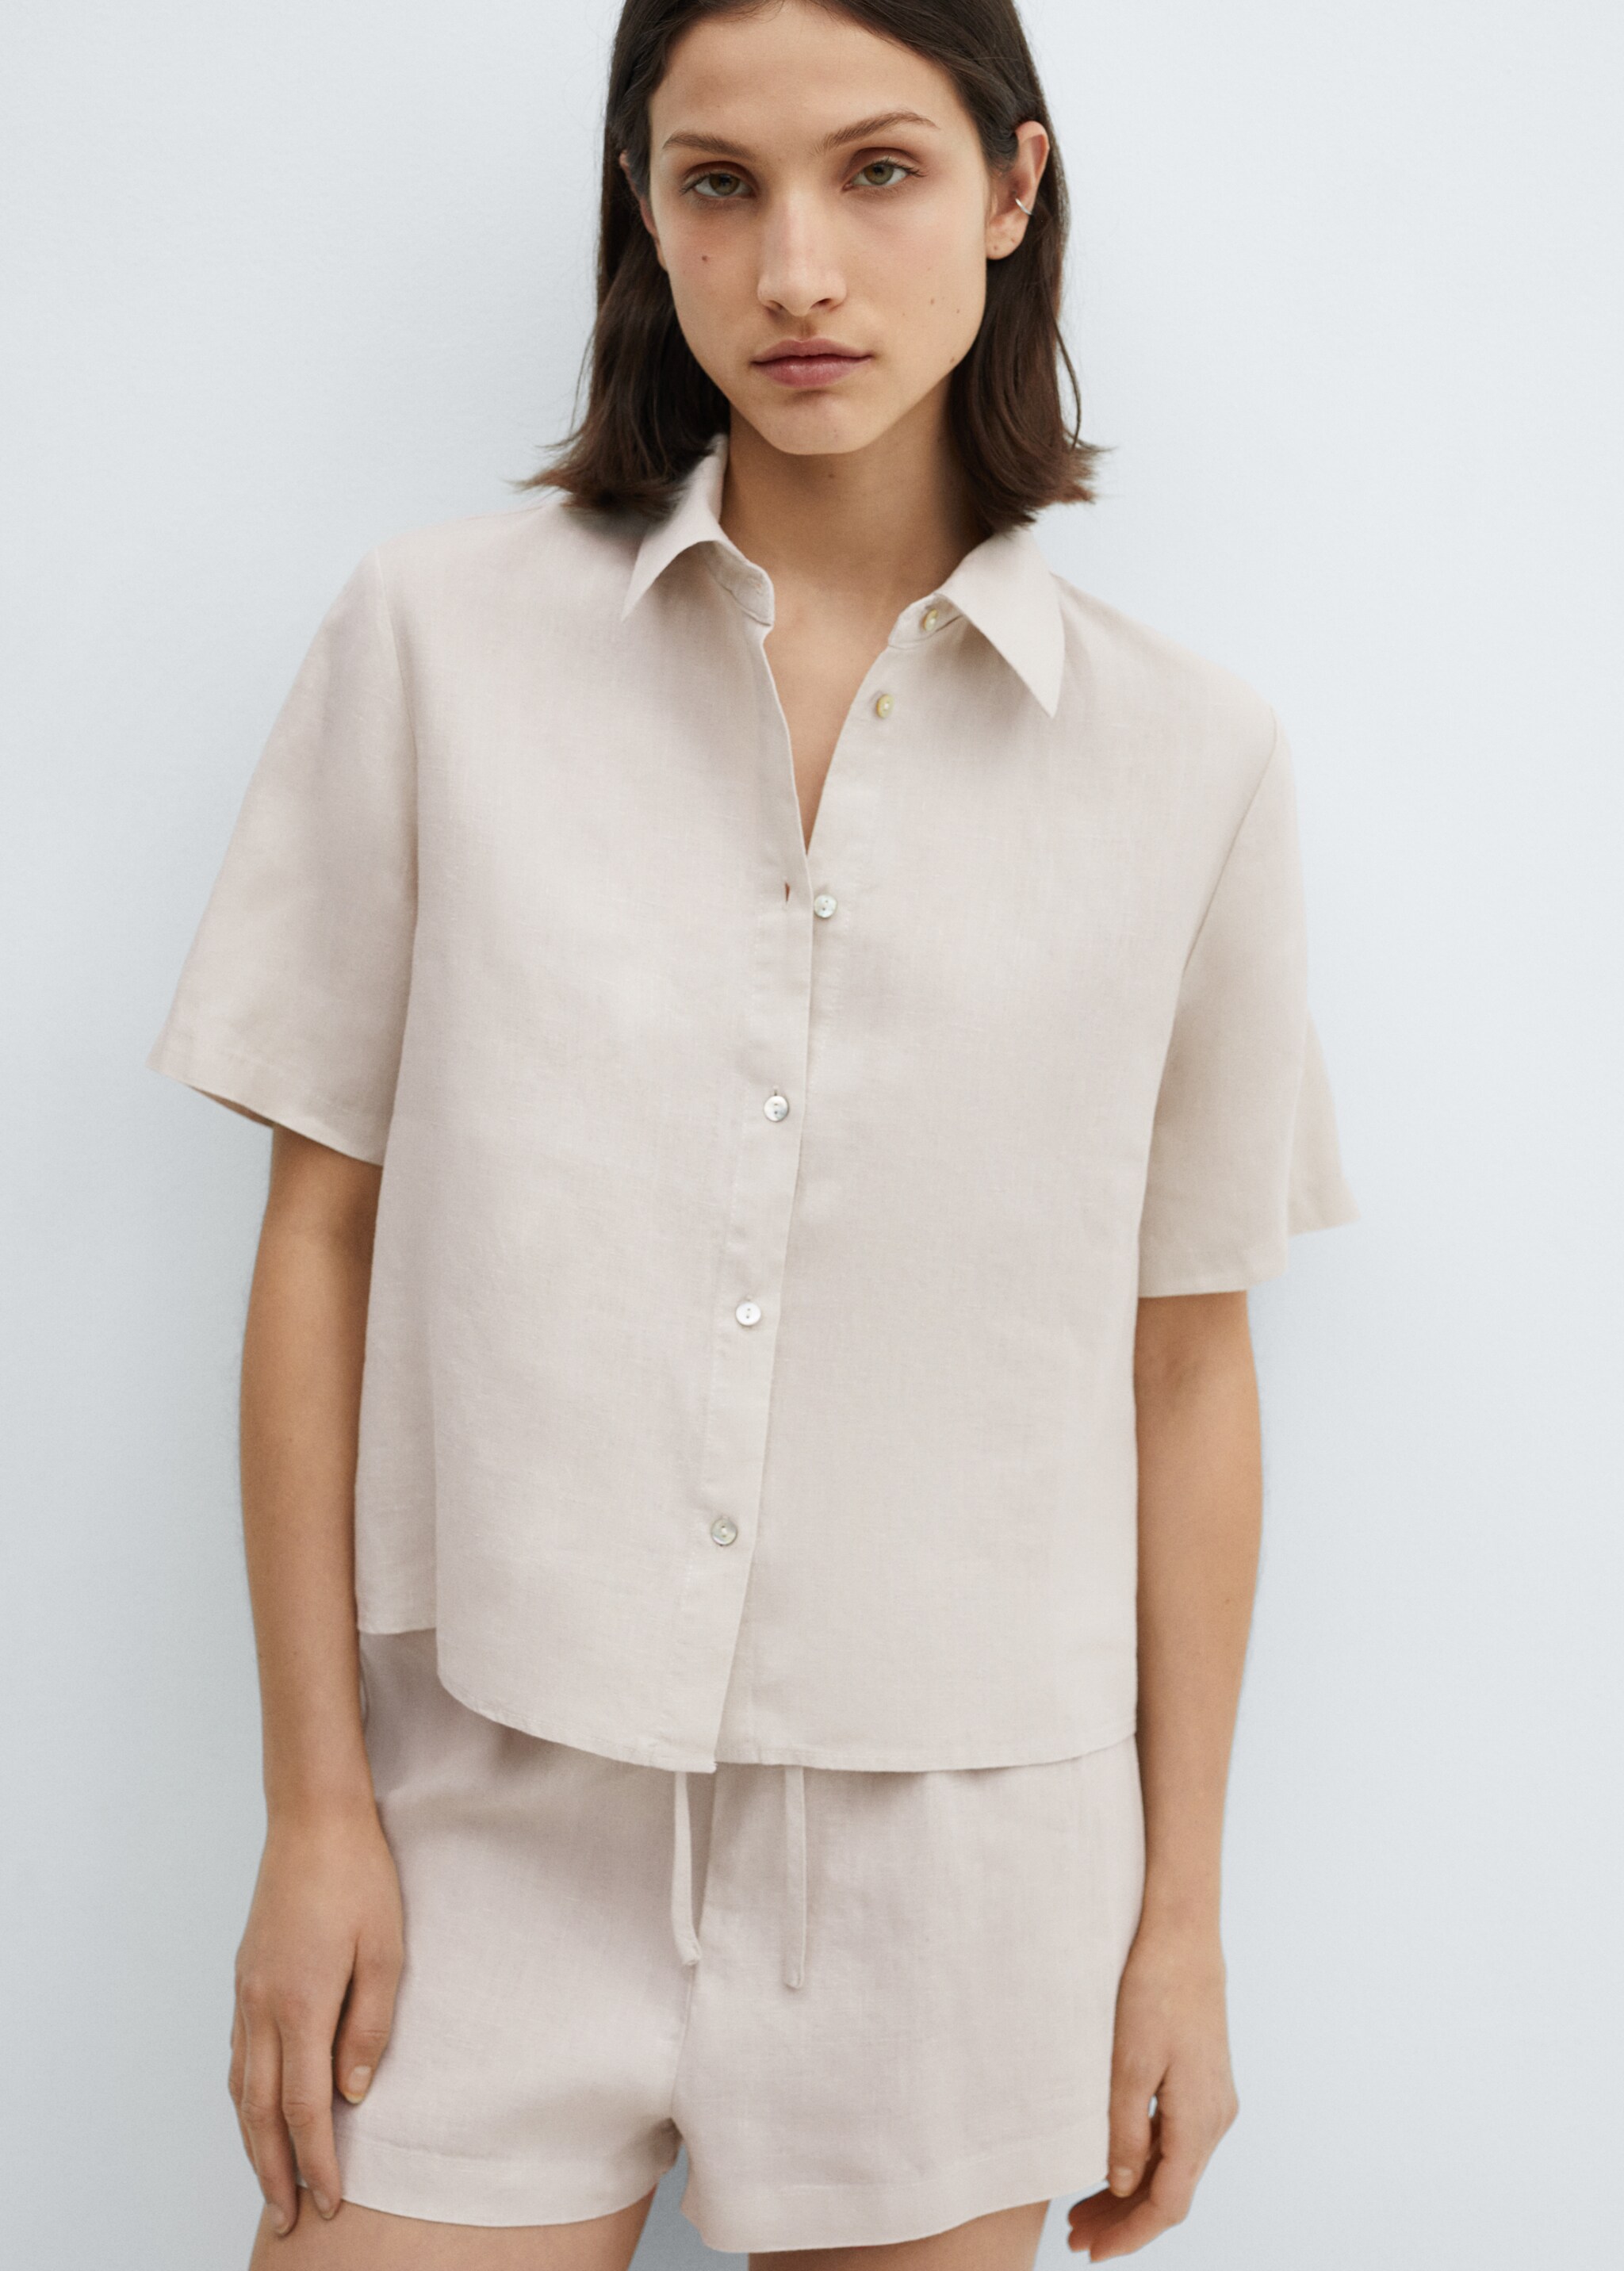 Pyjamasskjorta linne - Bild av mittparti